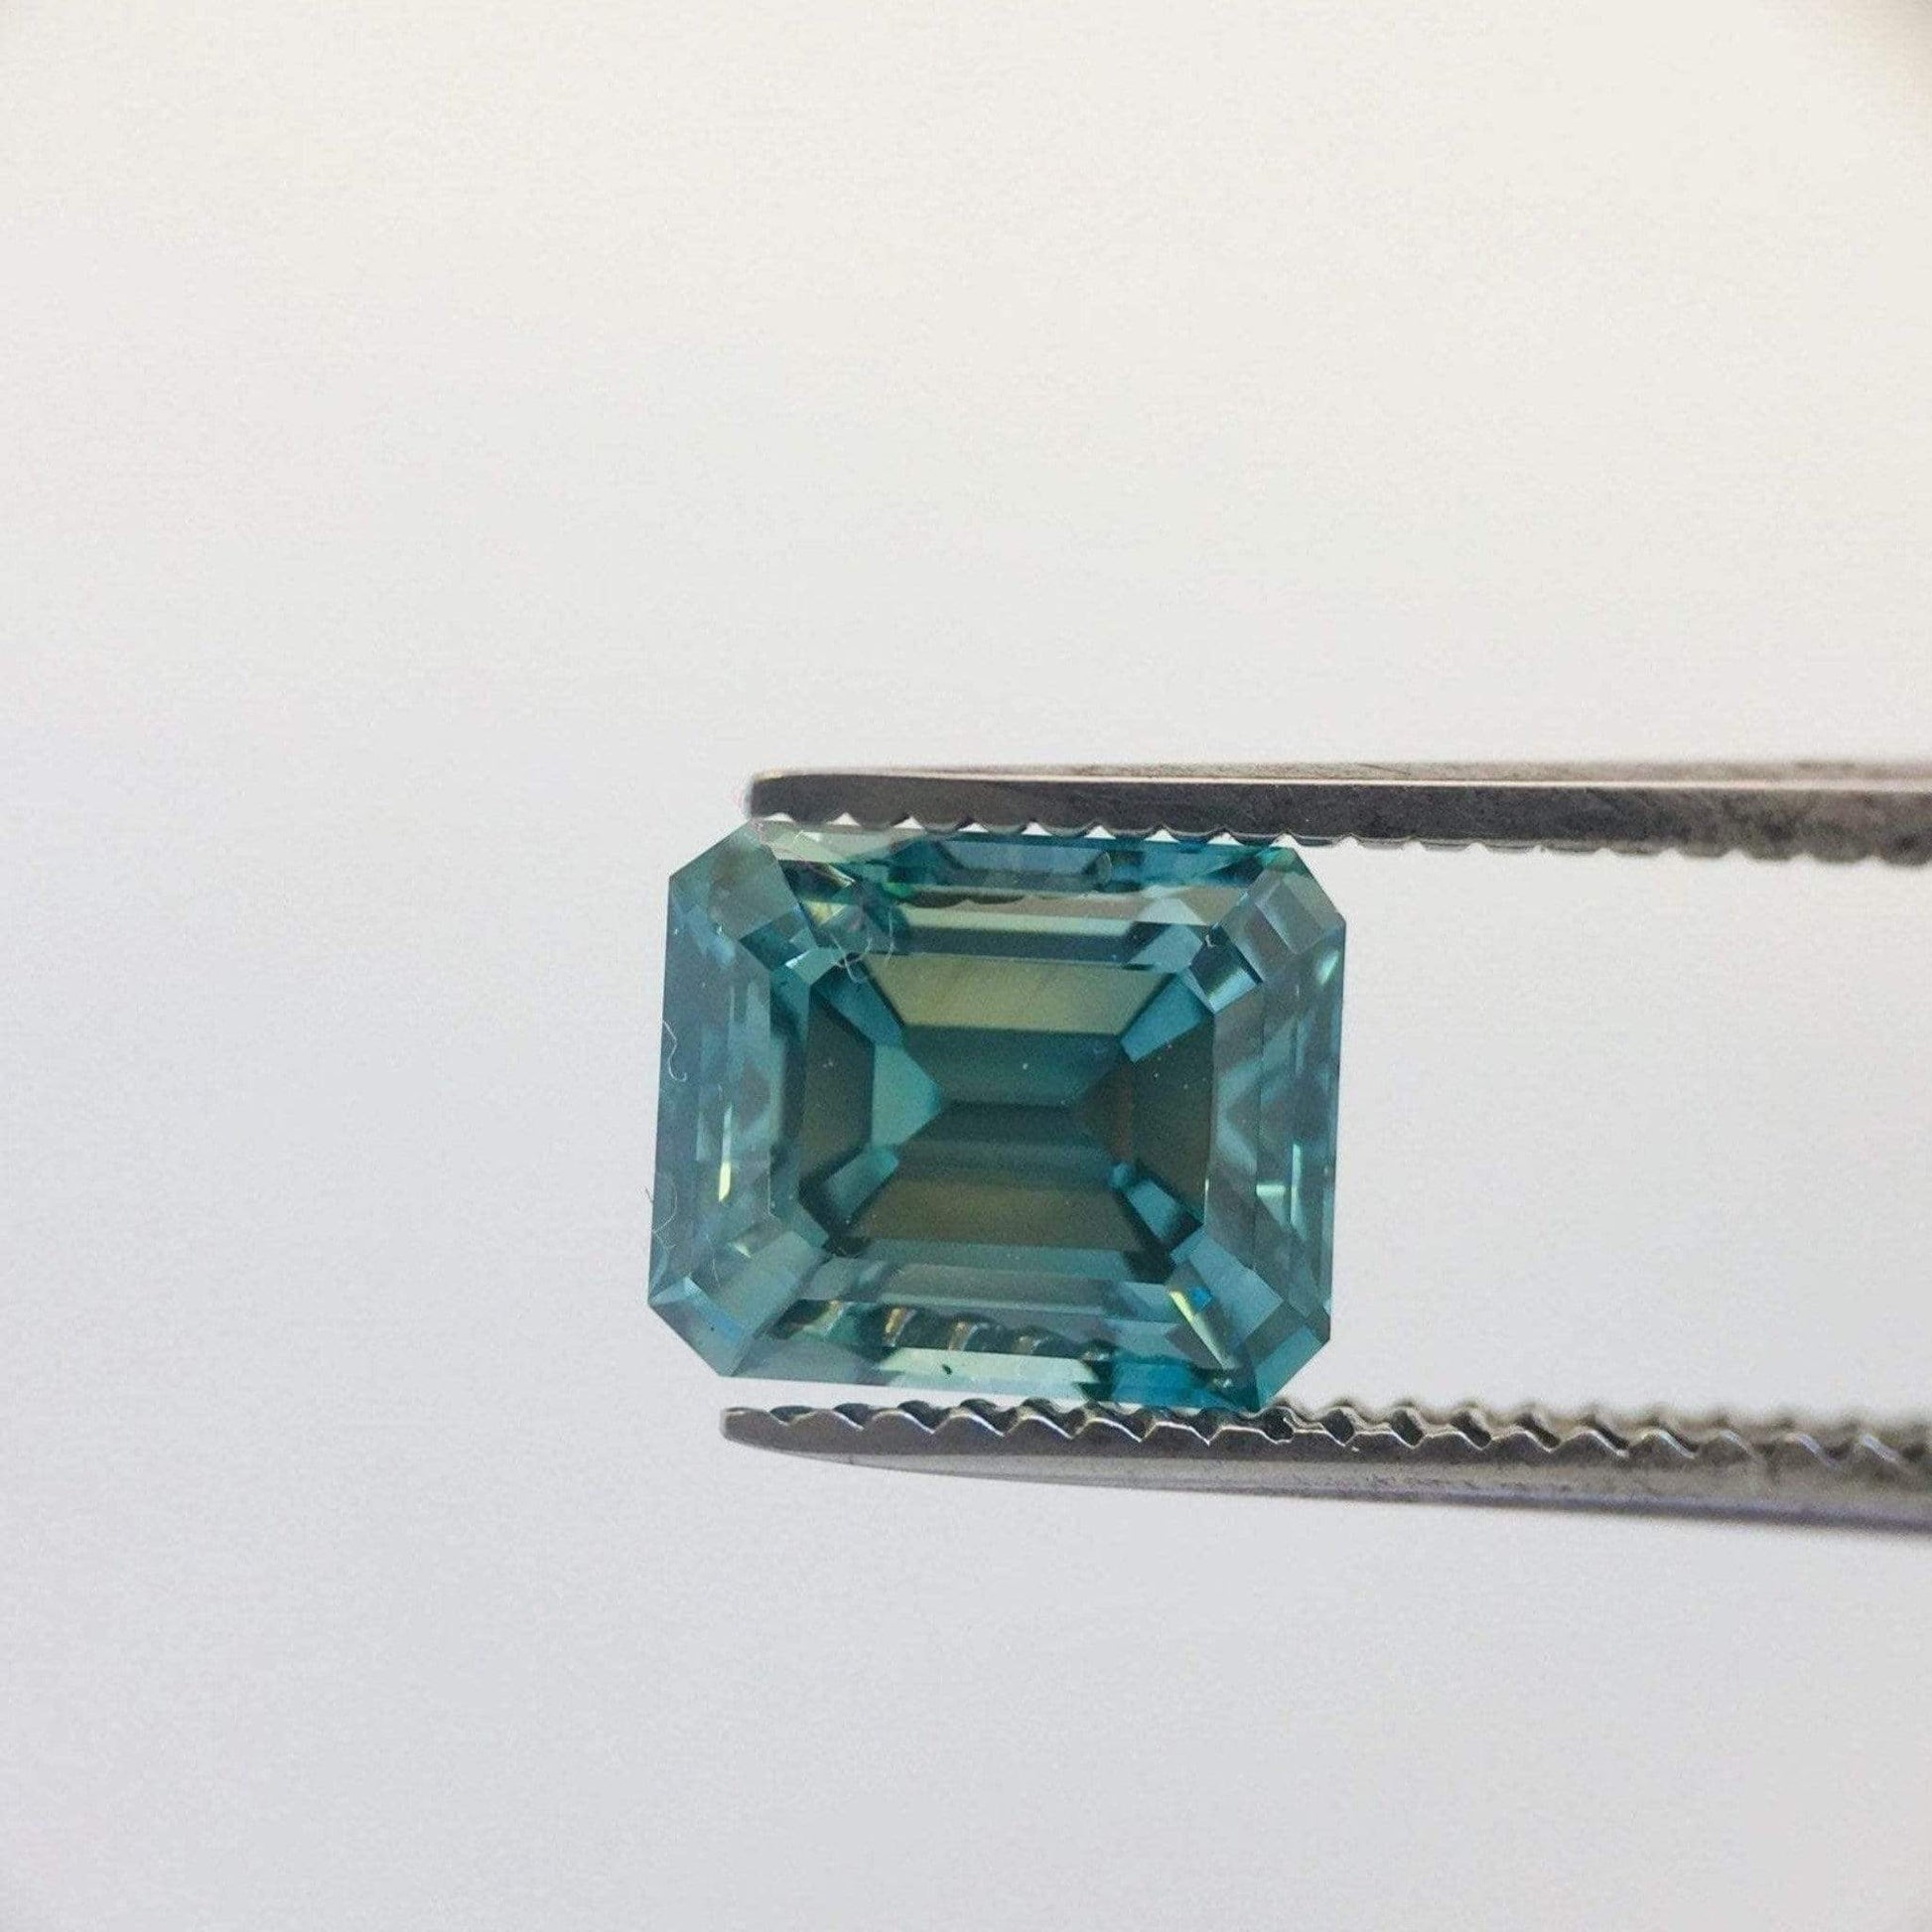 Treated Diamond - Engagement Rings